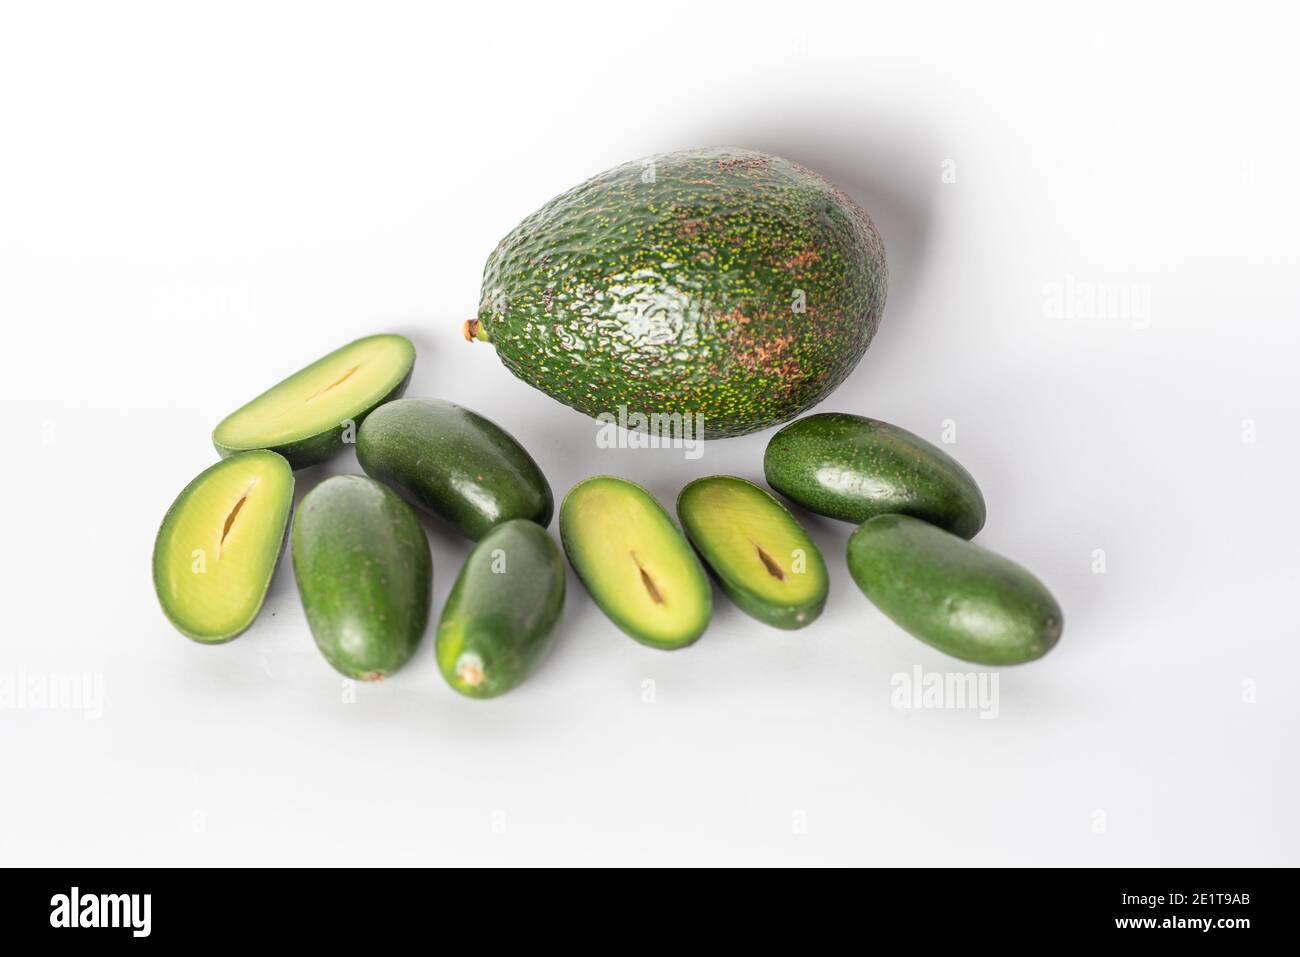 Cocktail avocados - stoneless snack avocados with a smooth creamy texture and edible skin. Stock Photo